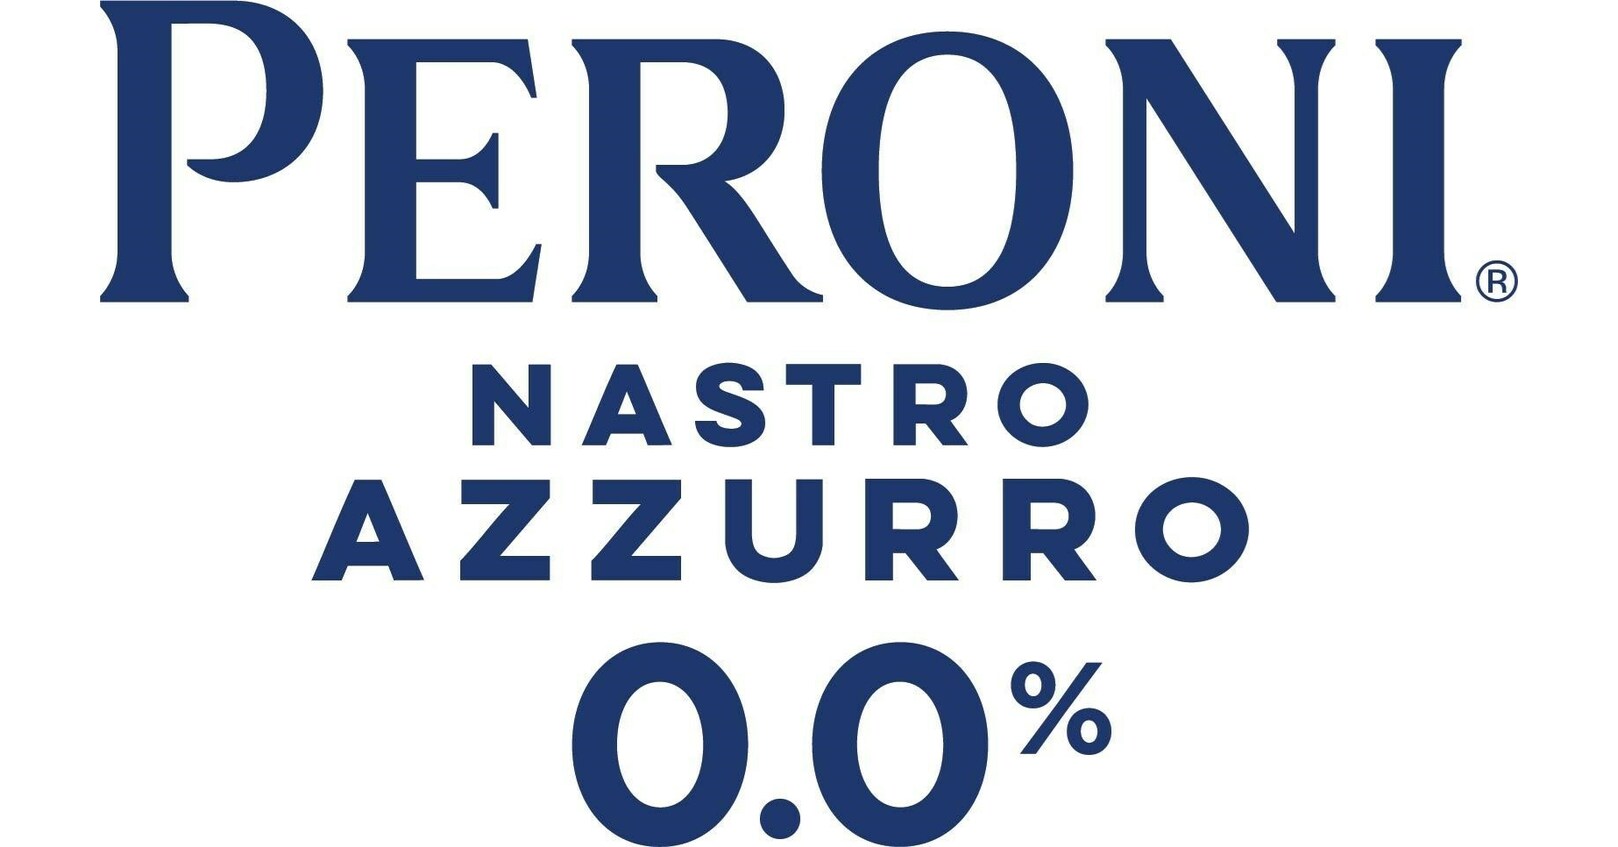 https://mma.prnewswire.com/media/2010531/Peroni_logo_Logo.jpg?p=facebook